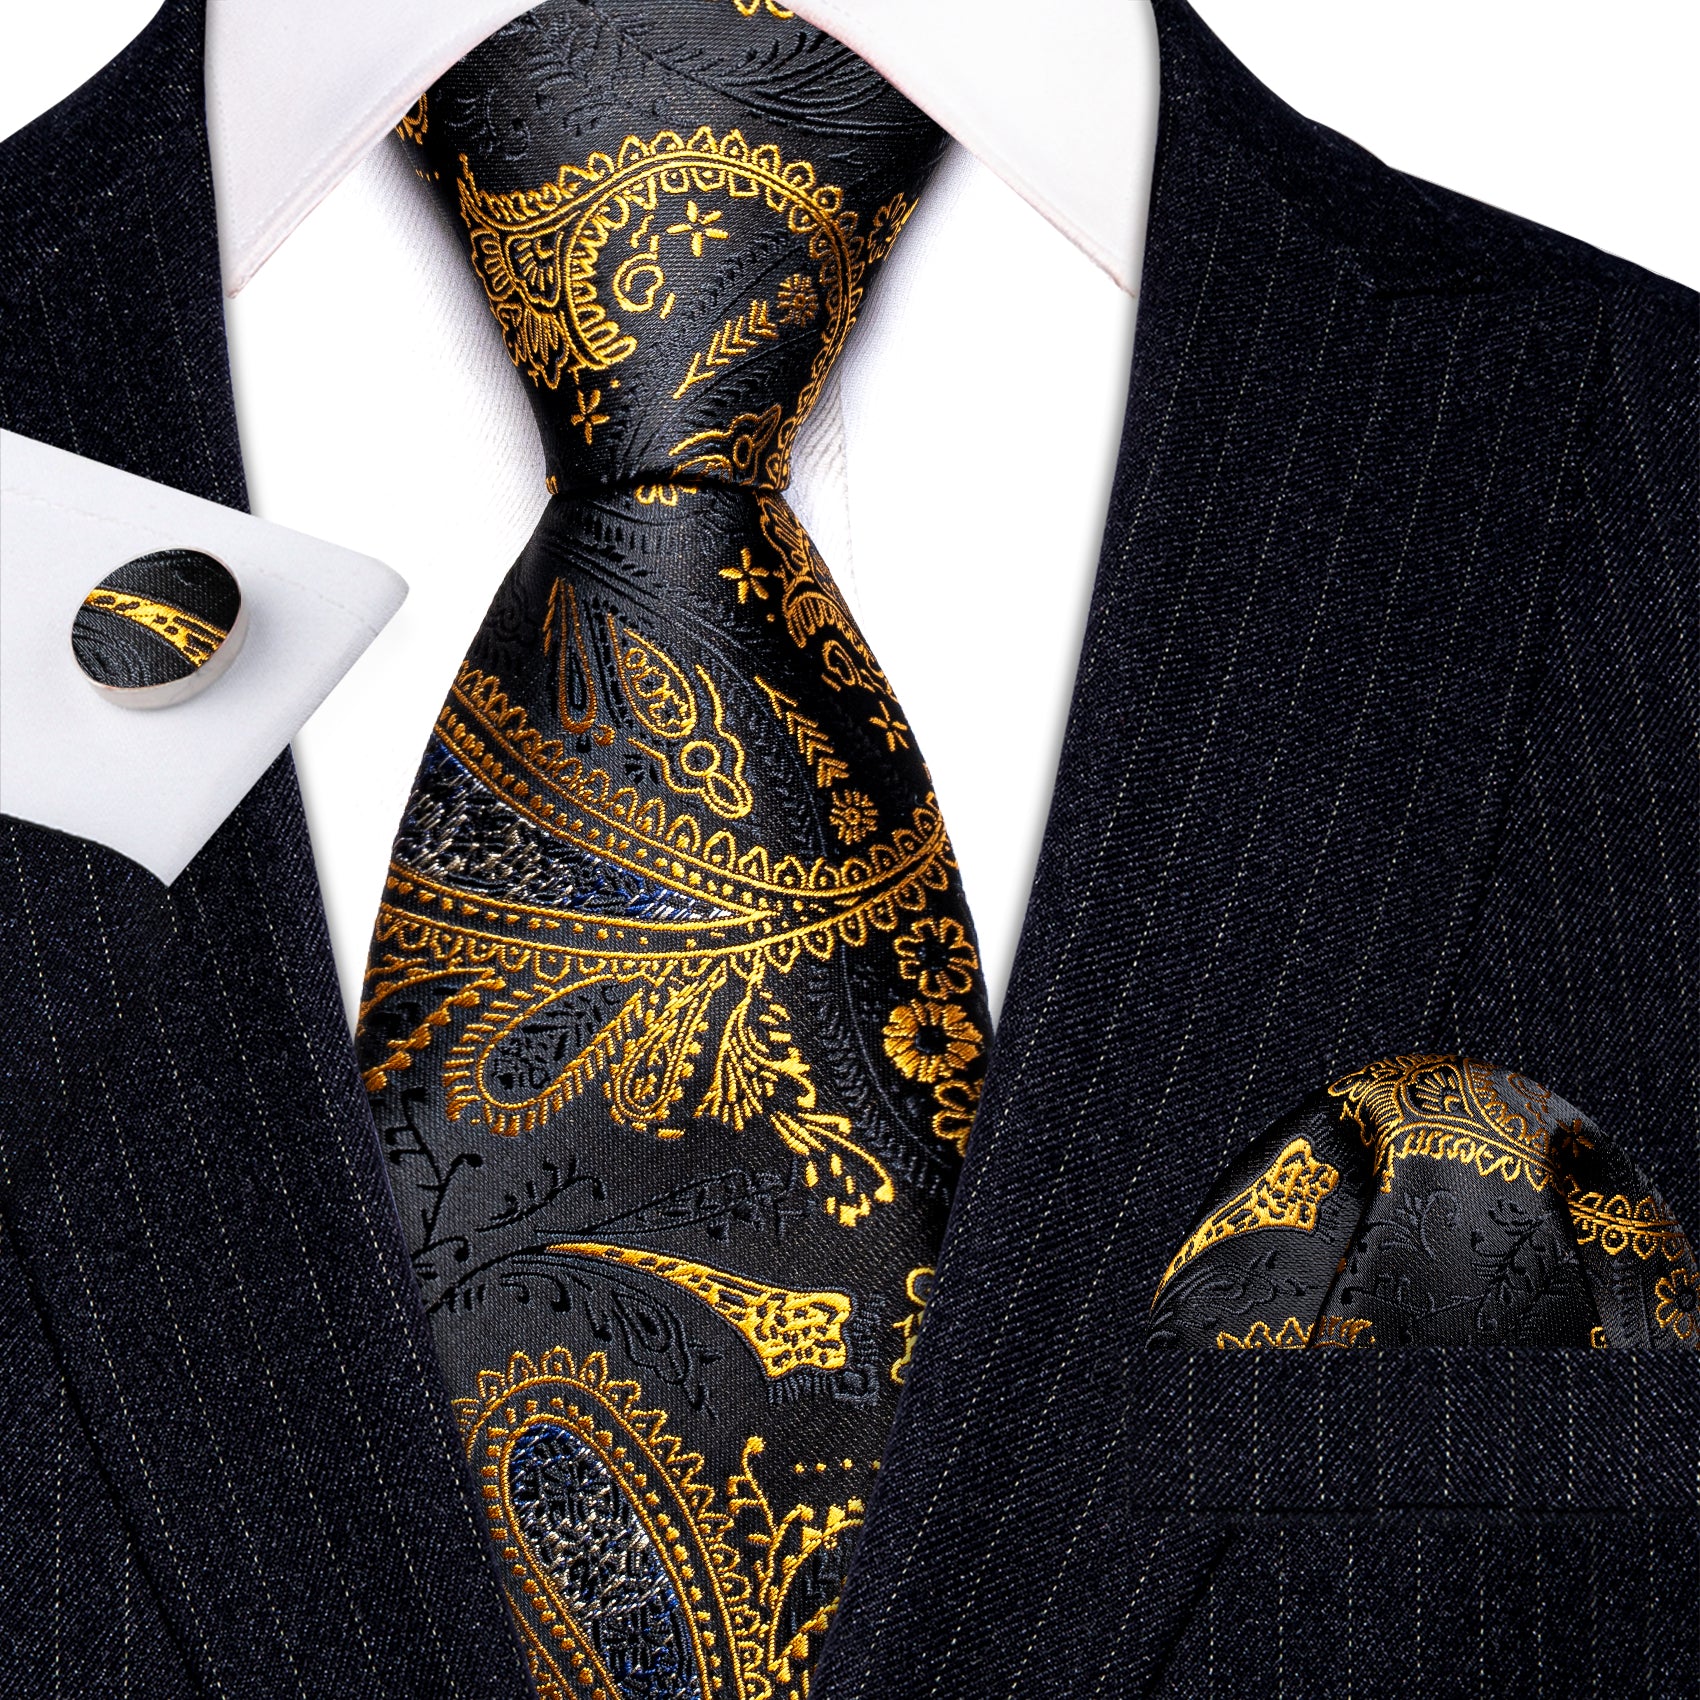 Novetly Black Gold Paisley Silk Tie Handkerchief Cufflinks Set